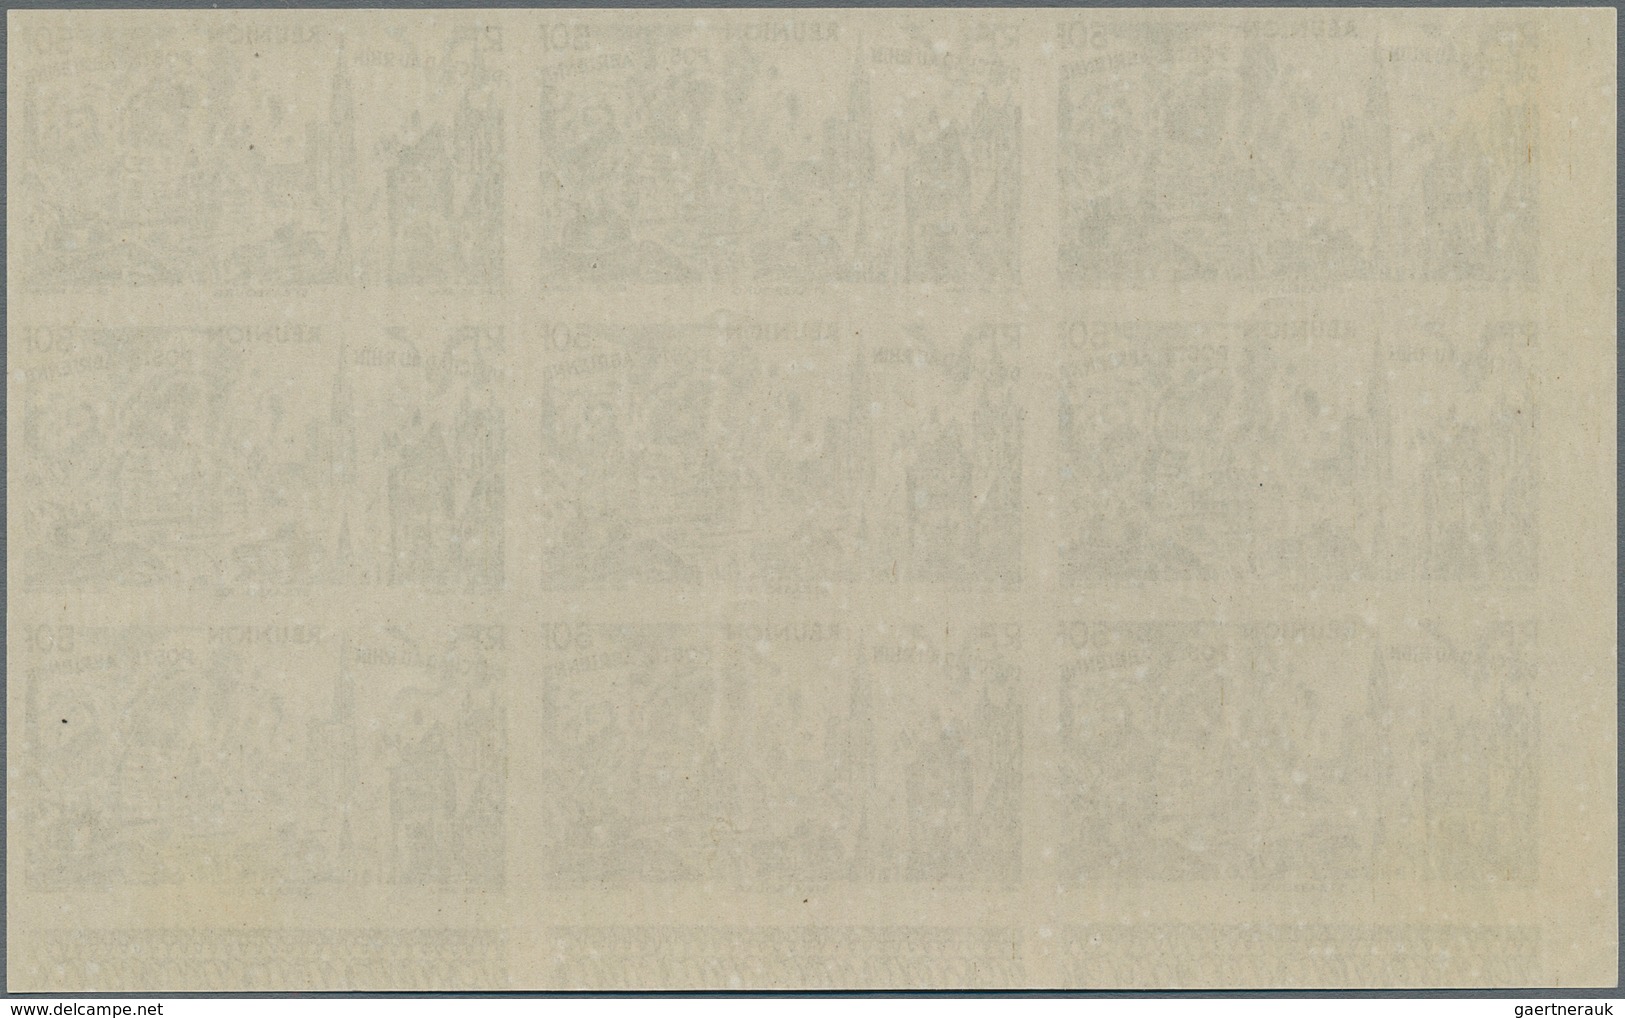 Reunion: 1946, Du Chad au Rhin, 5fr.-50fr., complete set of six values in imperforate marginal block